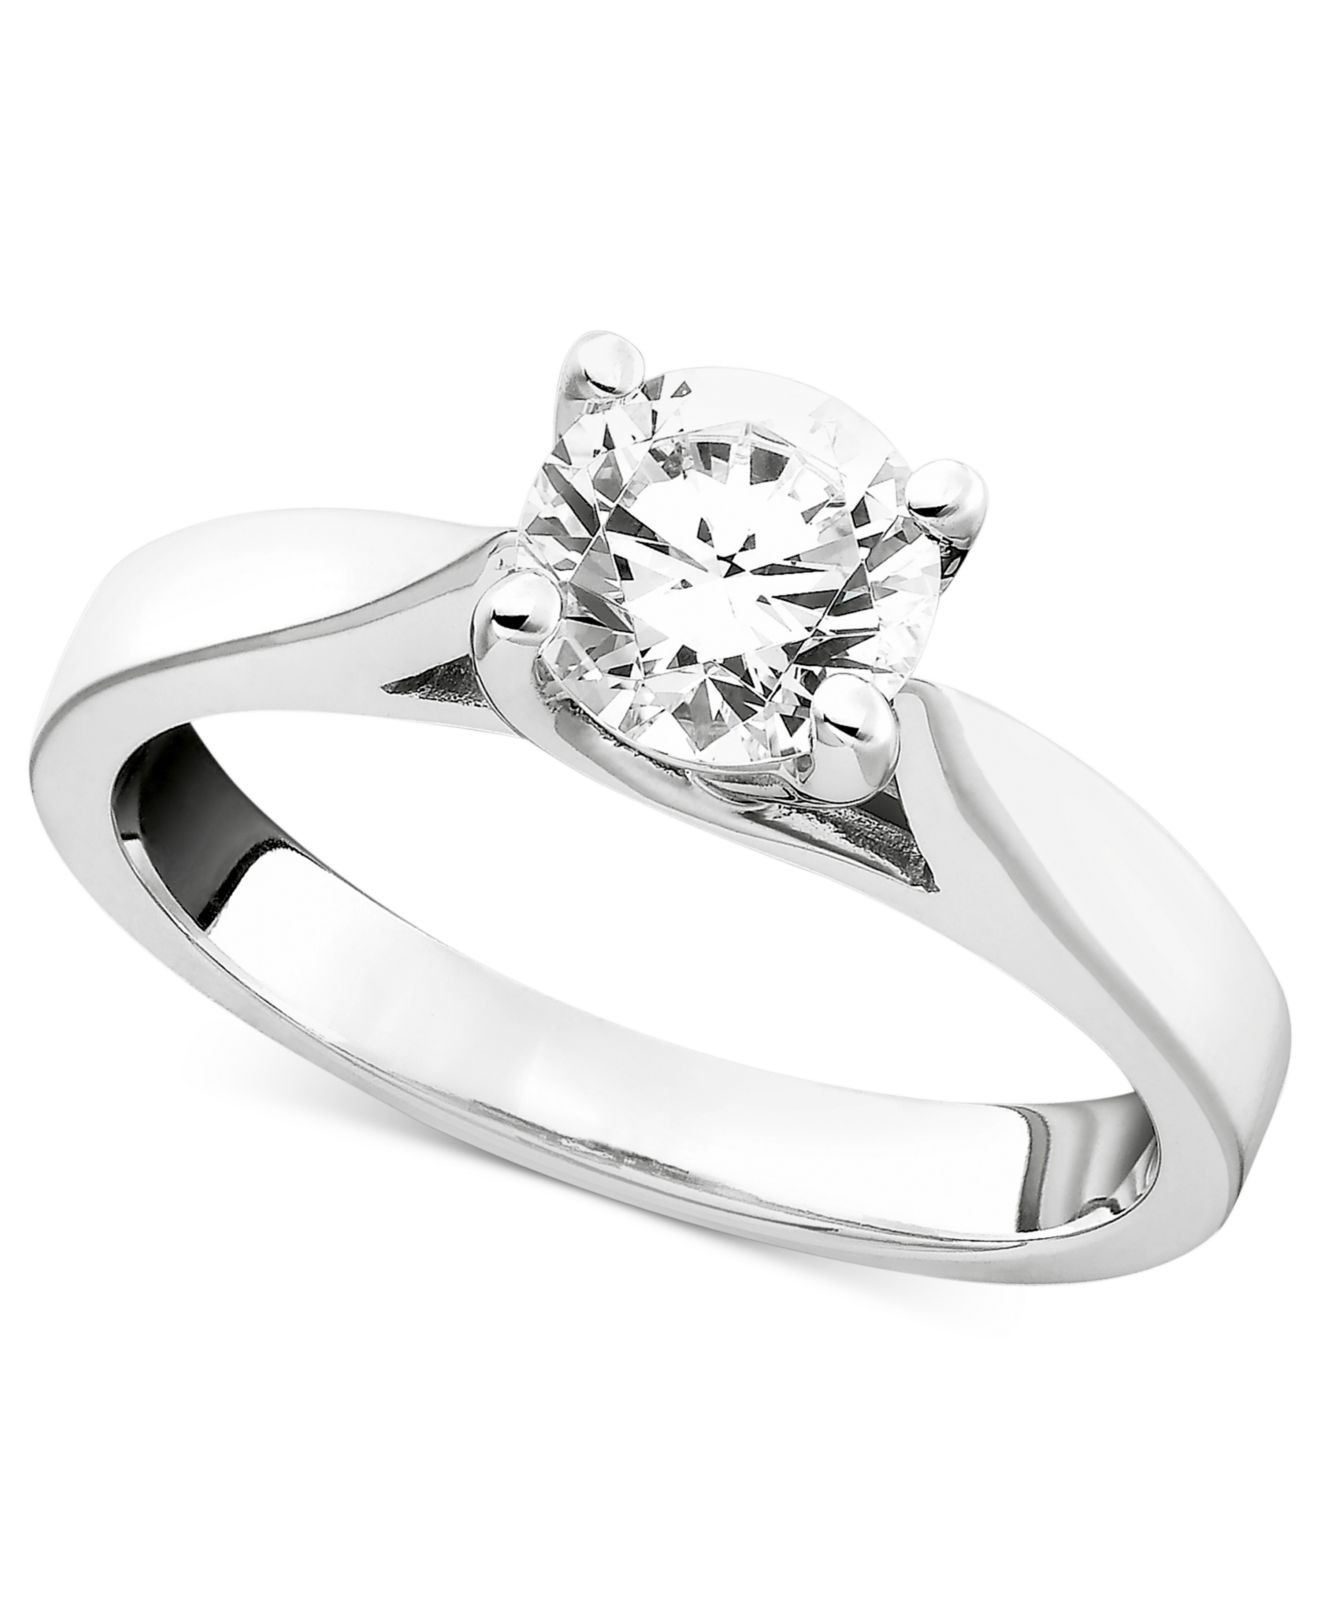 Macys Diamond Rings
 Macy s Certified Diamond Engagement Ring In 14K White Gold